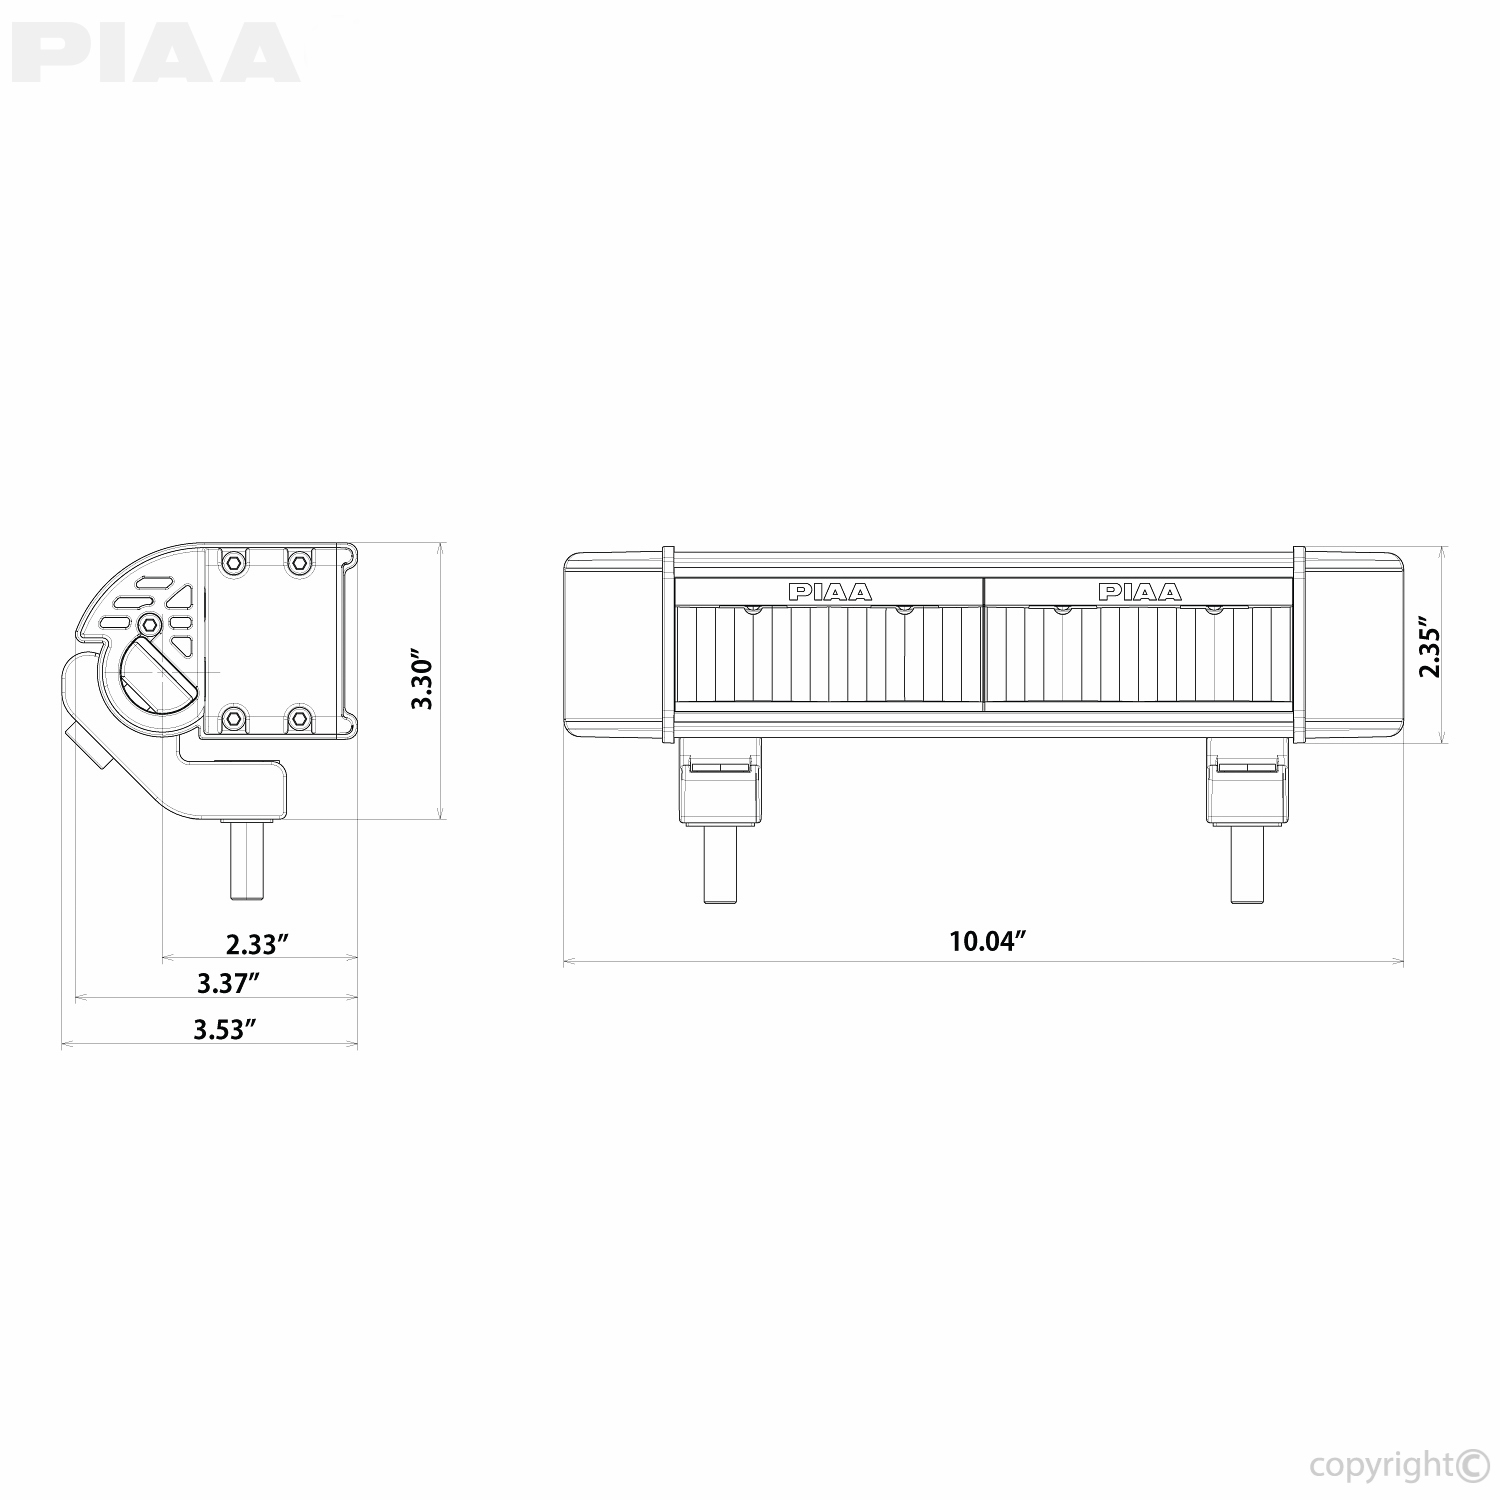 PIAA | PIAA RF Series 18